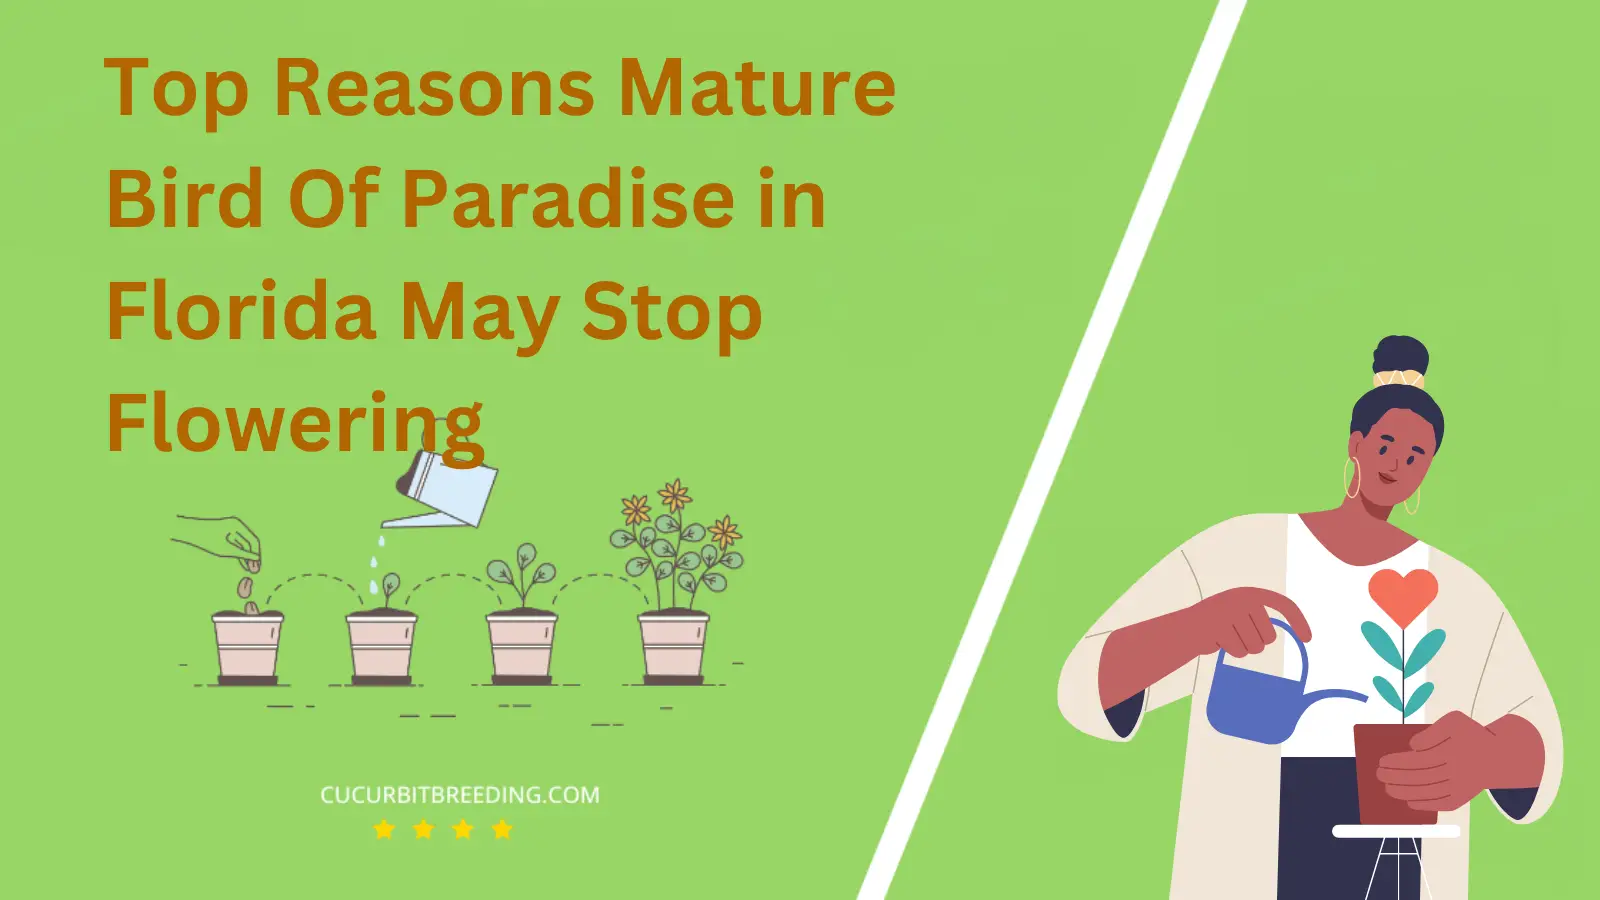 Top Reasons Mature Bird Of Paradise in Florida May Stop Flowering